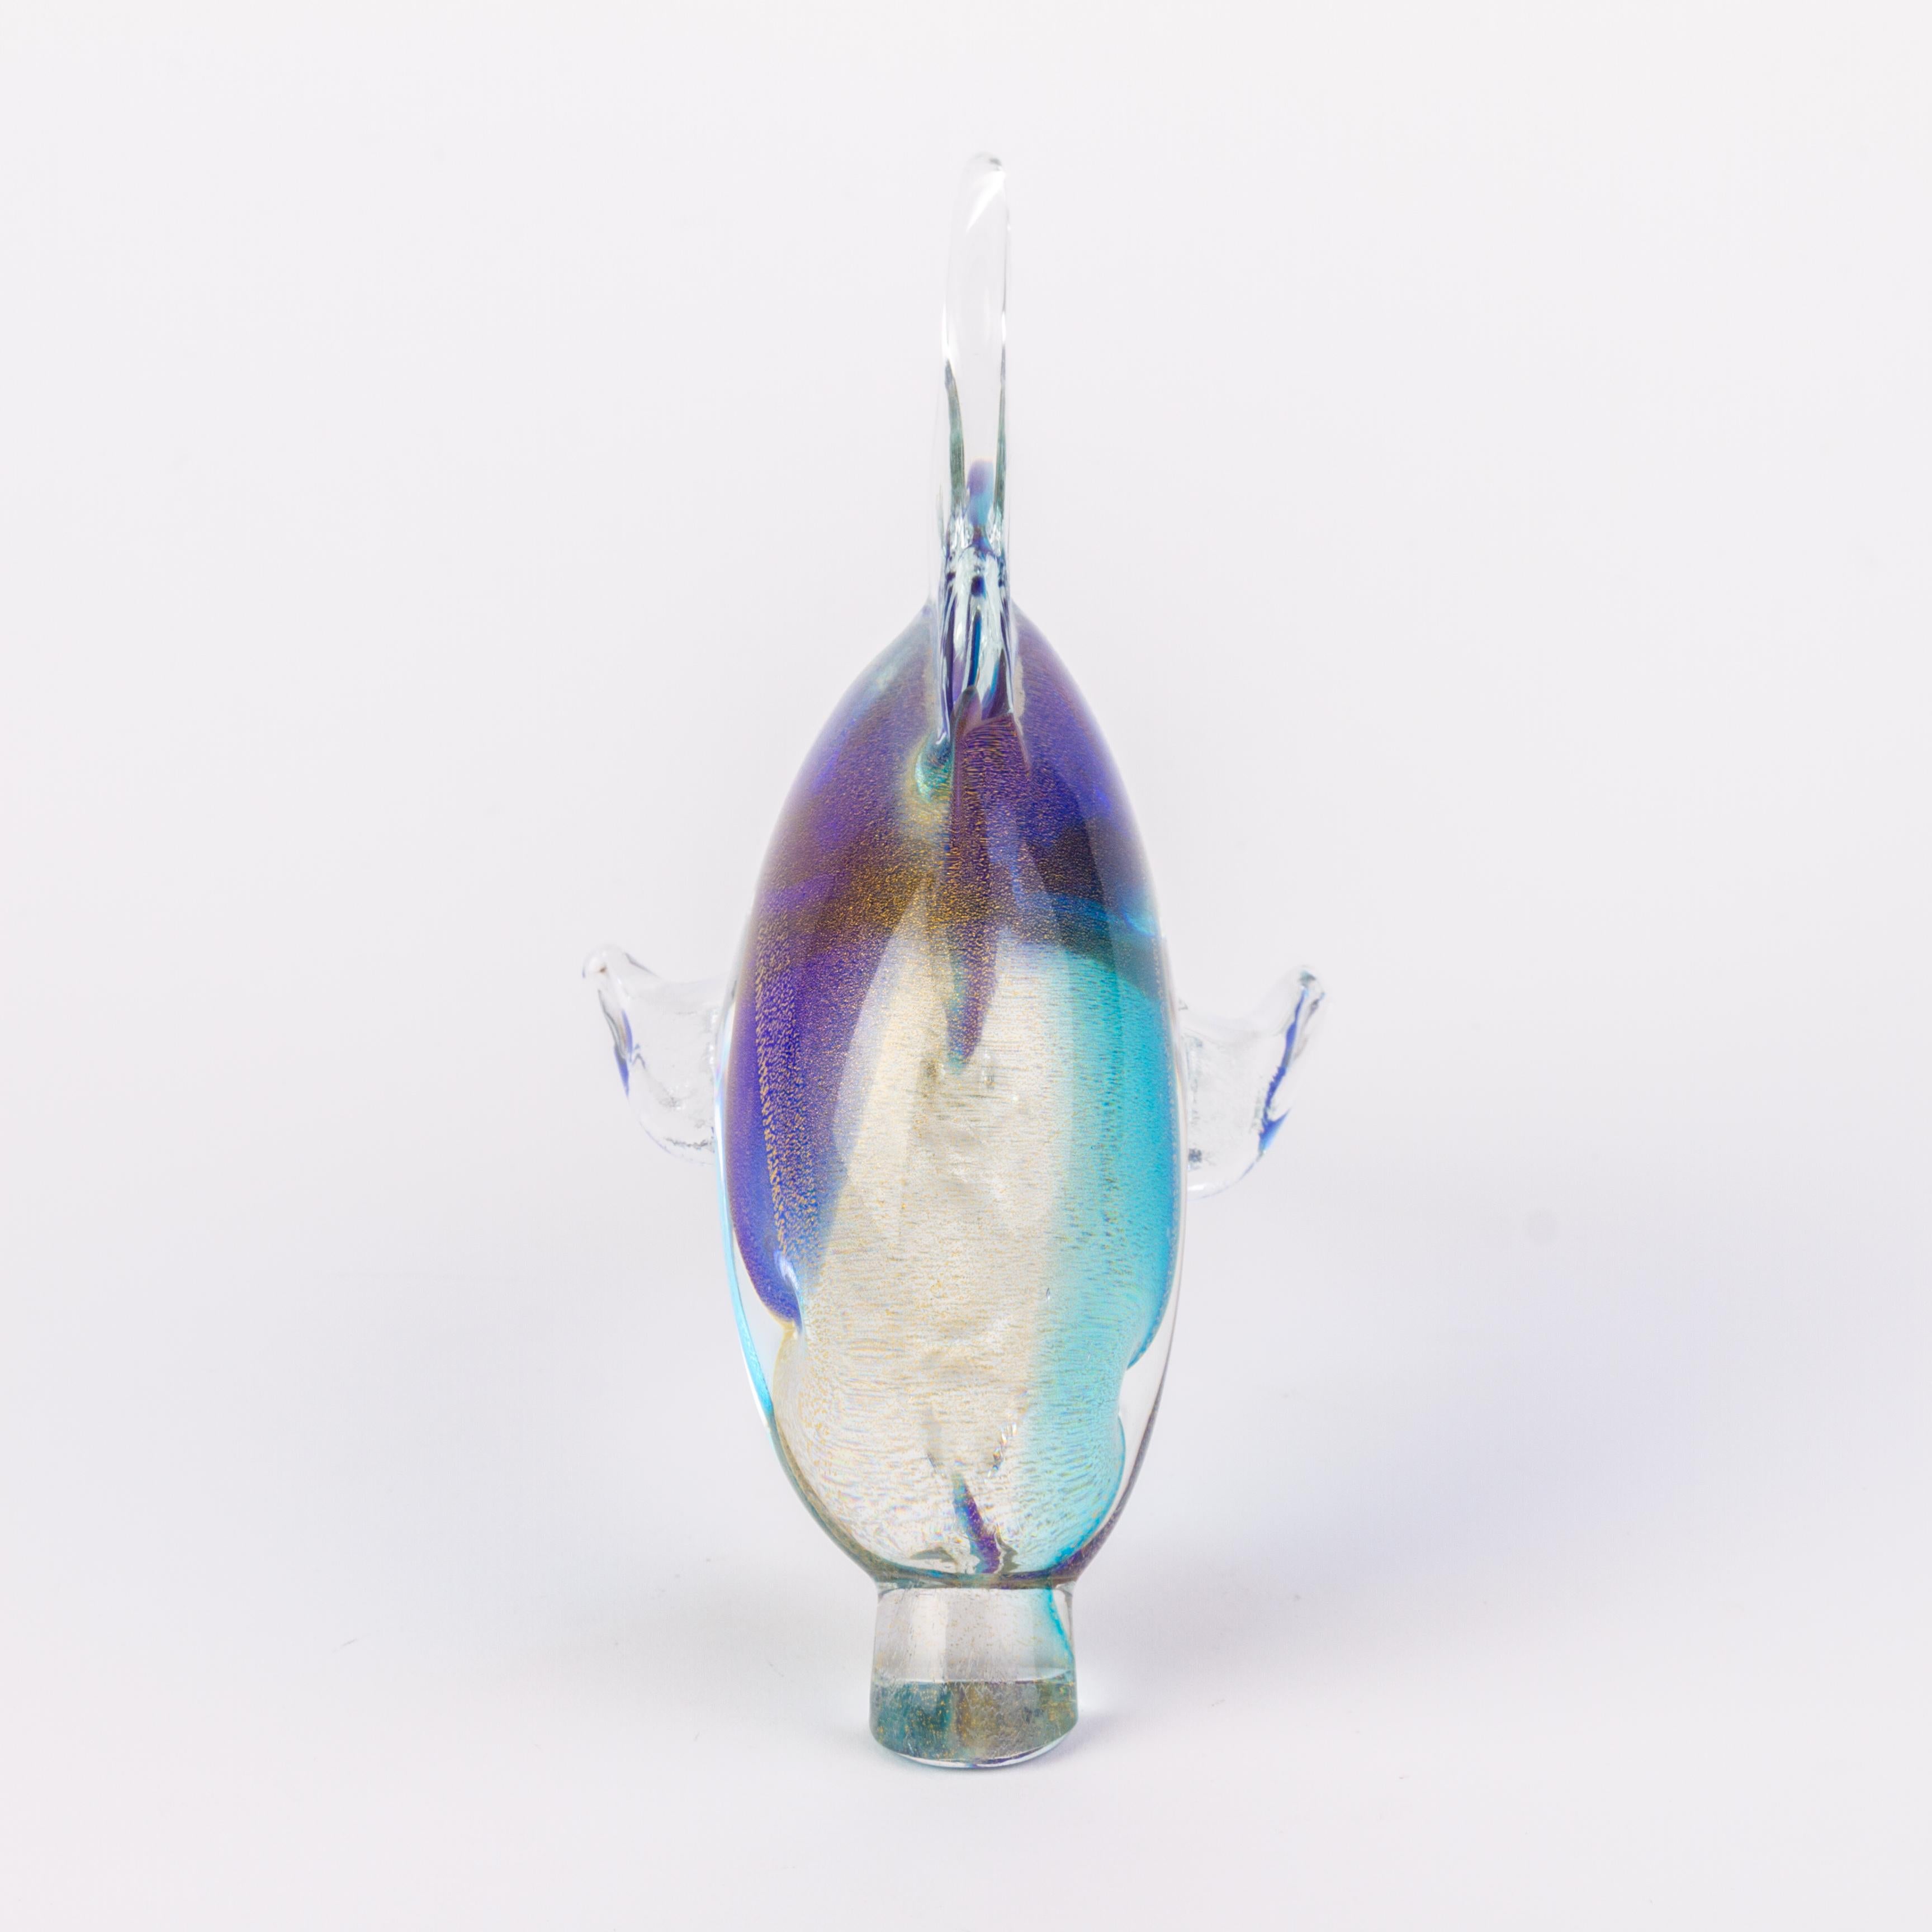 Murano Venetian Glass Sculpture Dolphin
Good condition
Free international shipping.